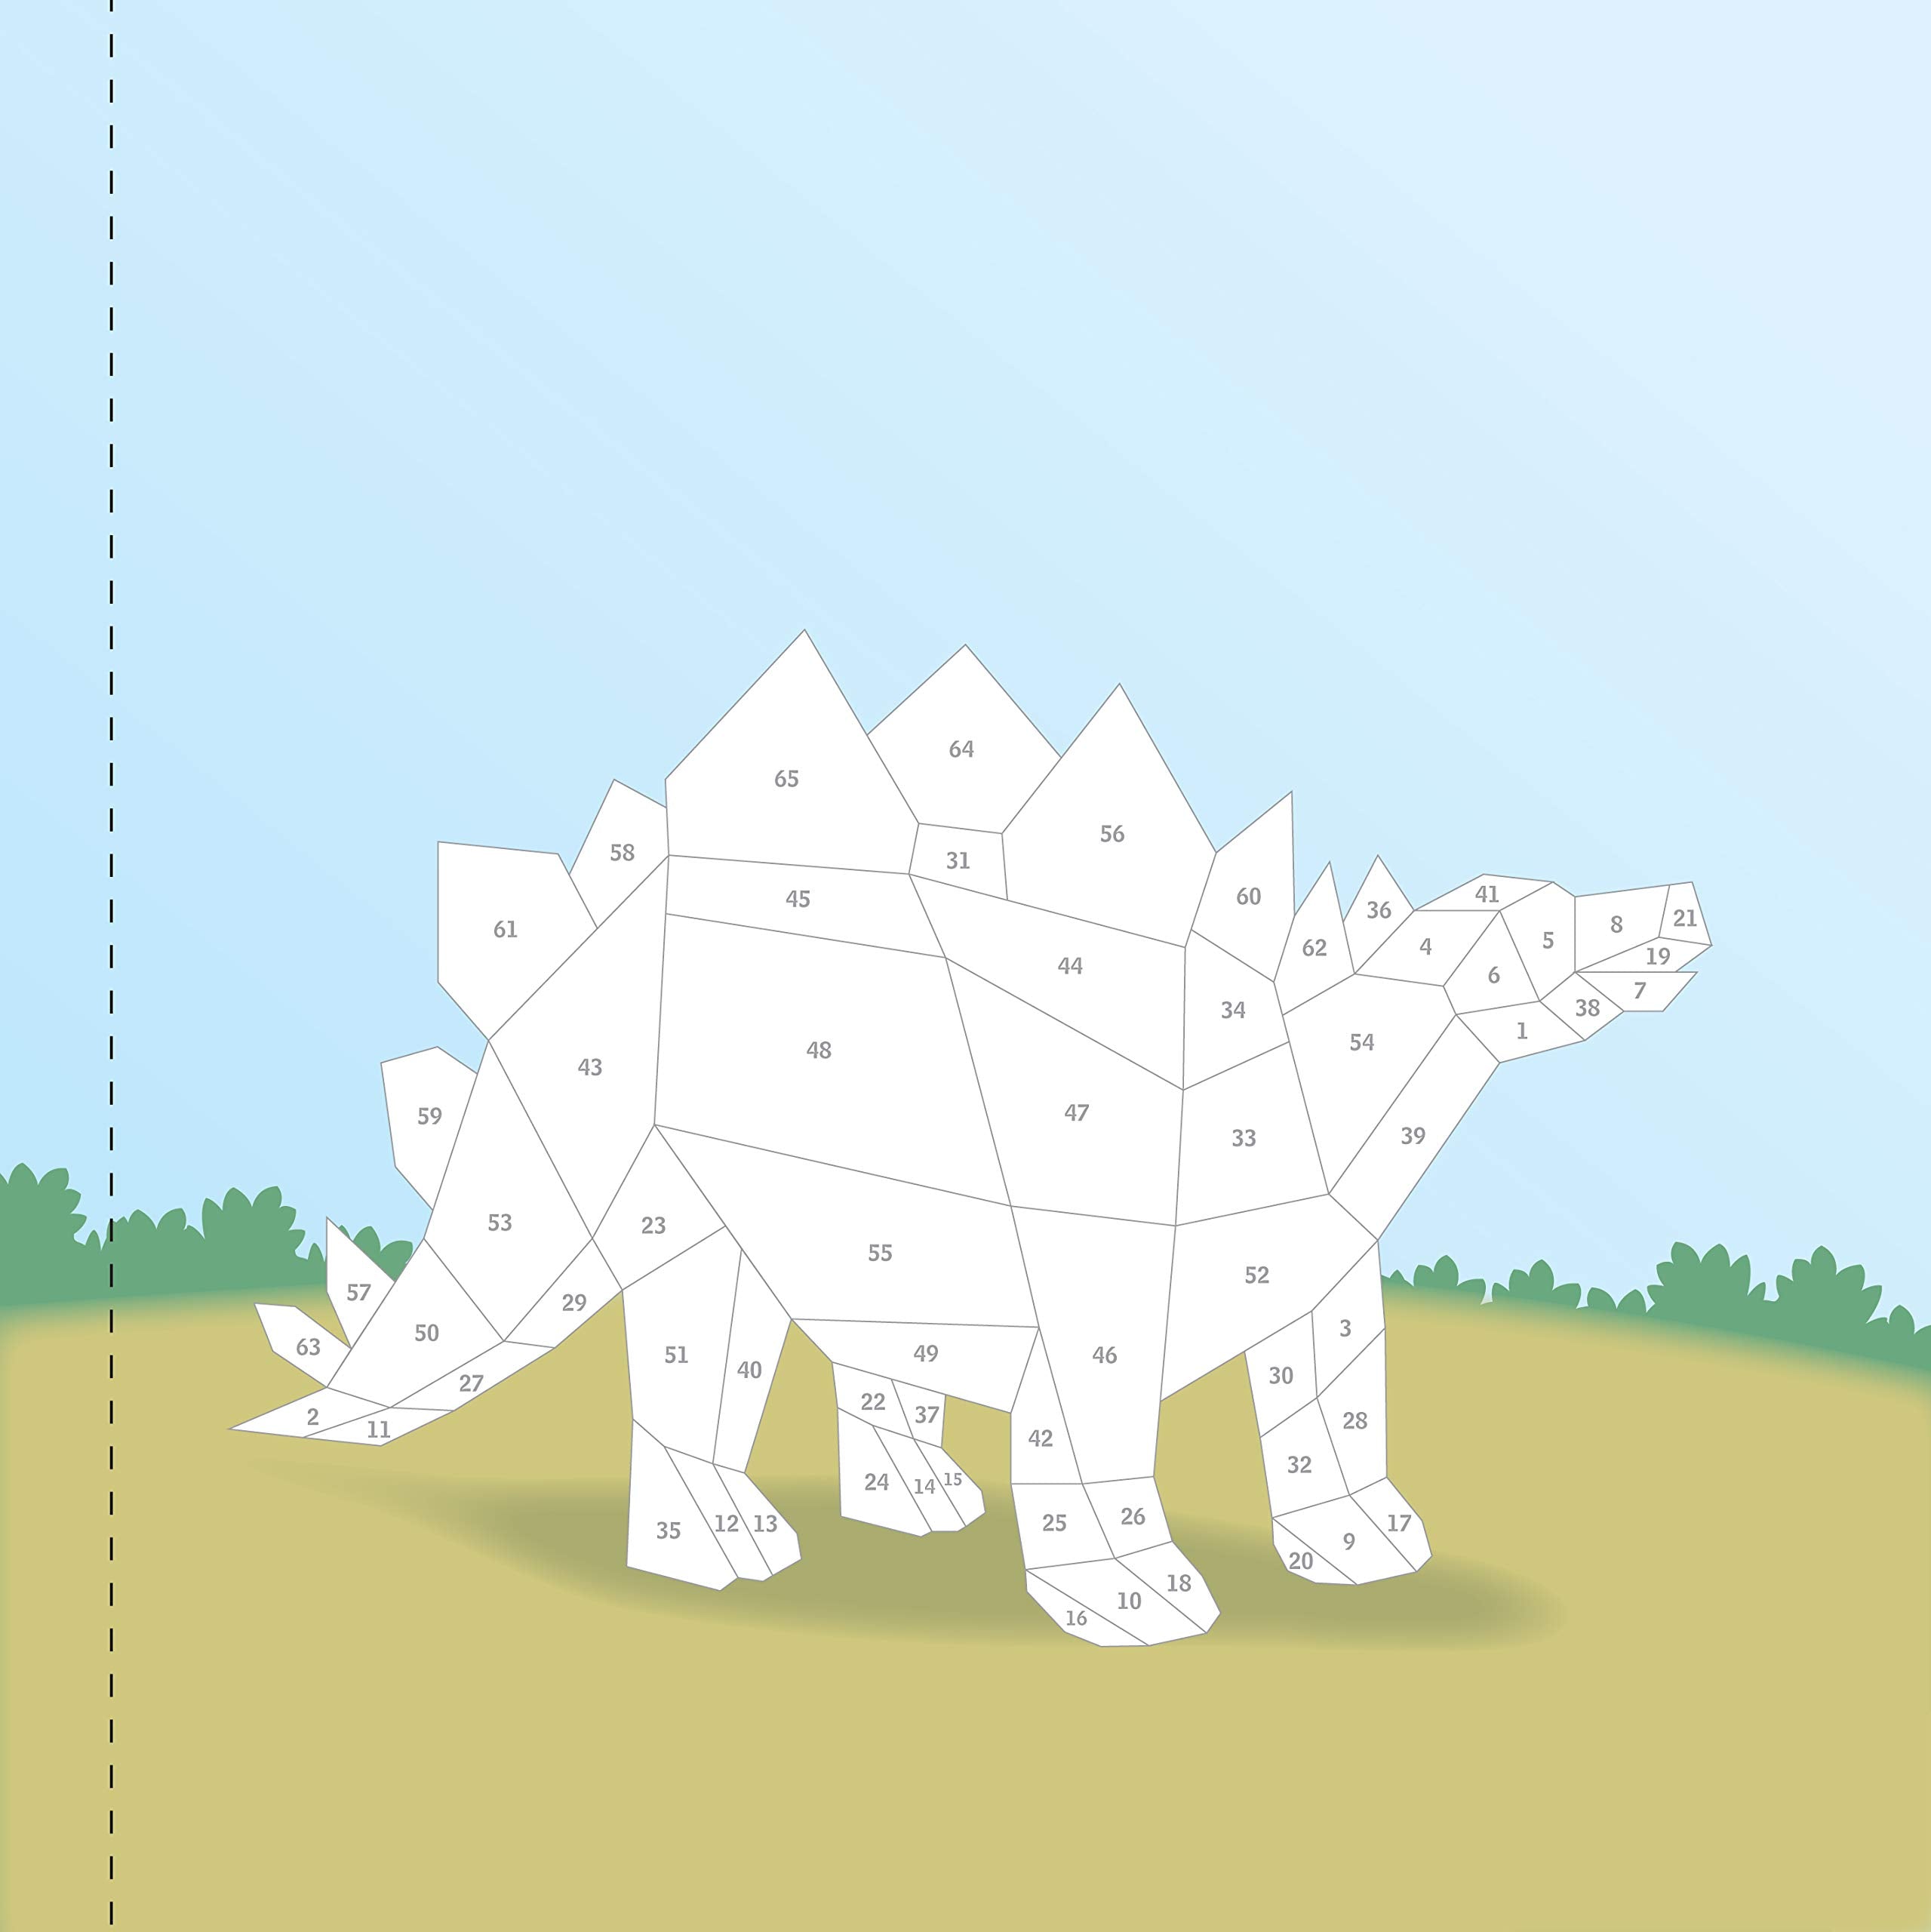 Paint by Sticker Kids: Dinosaurs (Paperback Book)-HACHETTE BOOK GROUP USA-Little Giant Kidz